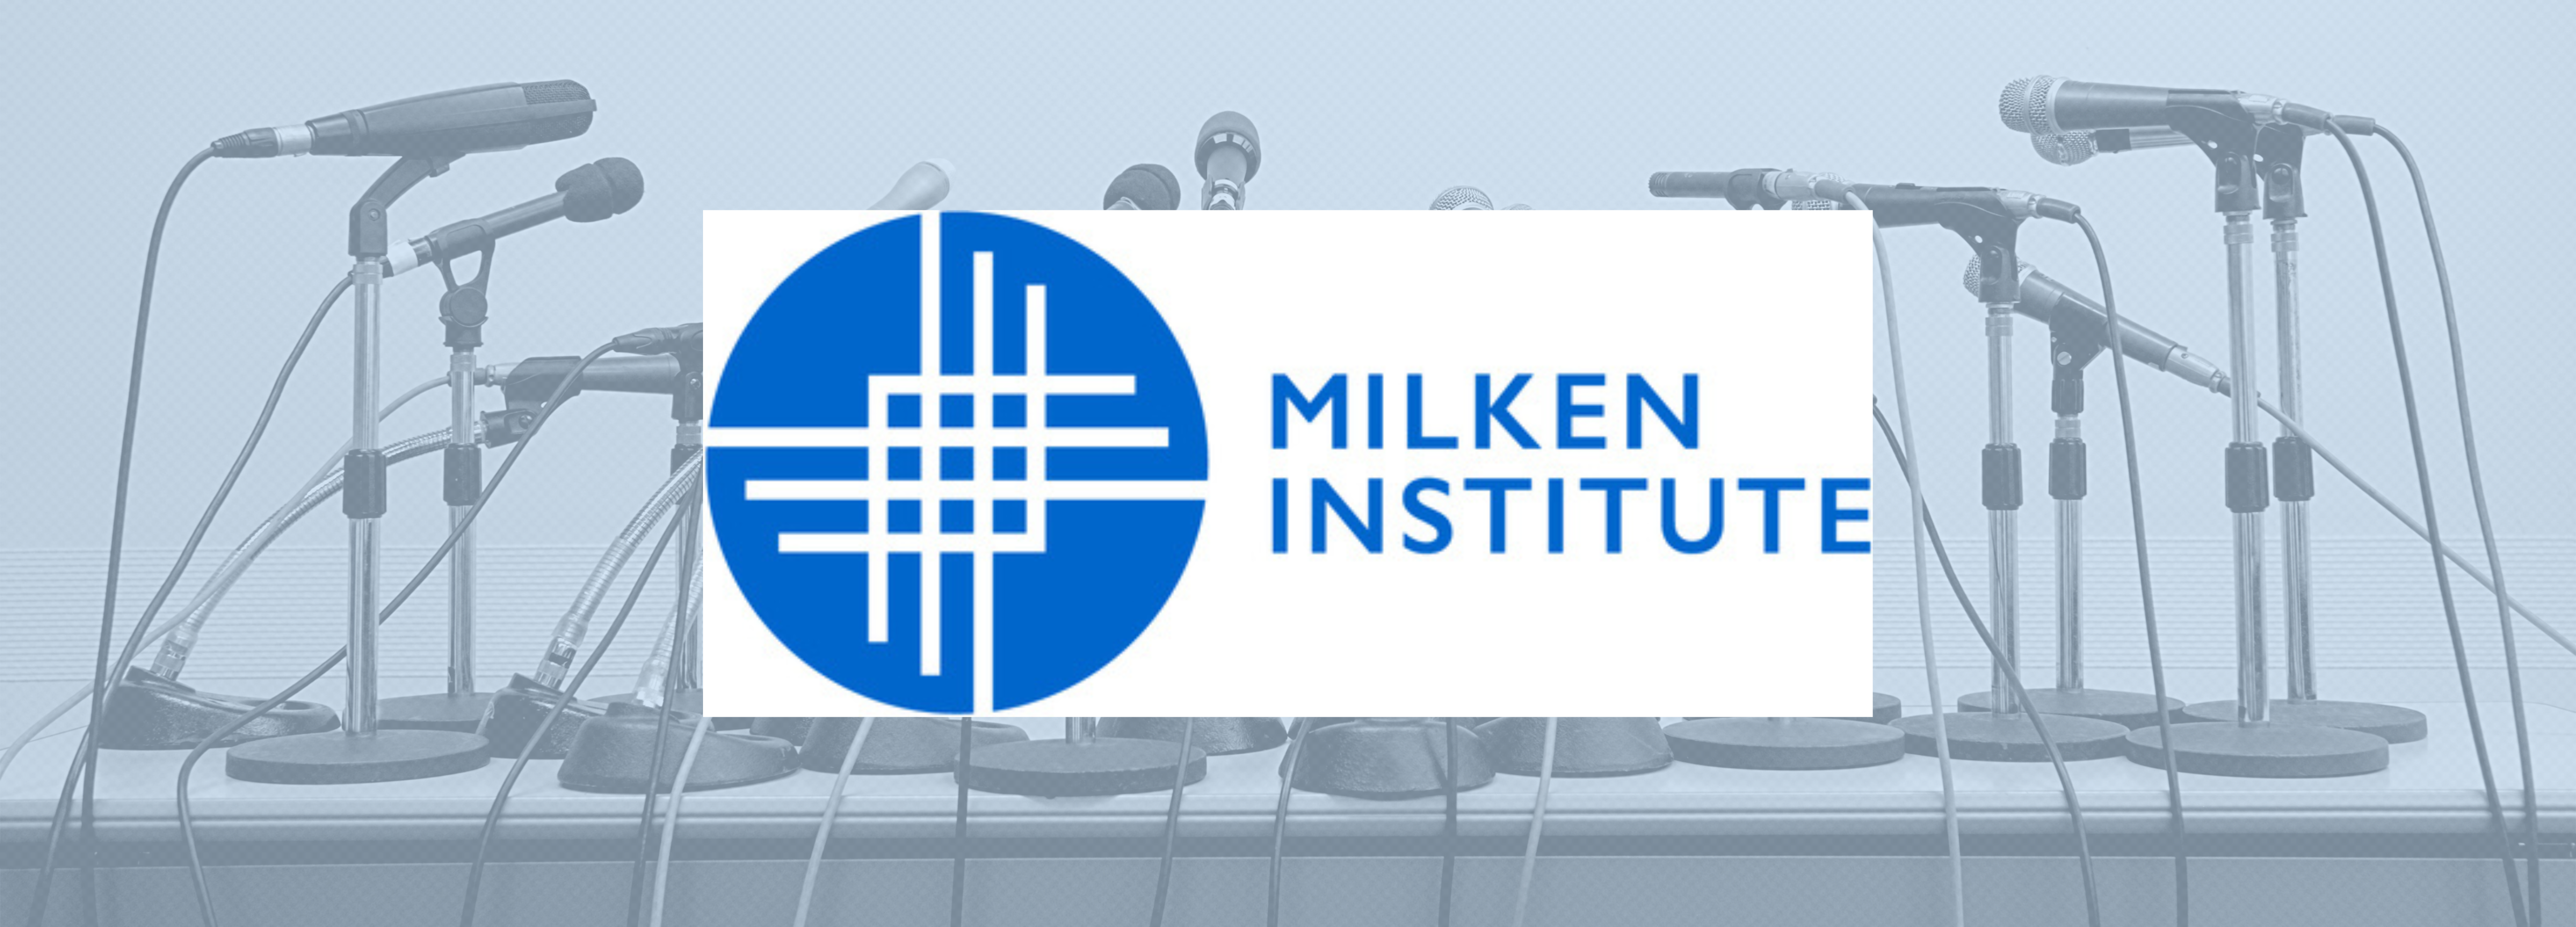 Milken Institute Launches HBCU Fellowship Program To Build Out Diversity Pipeline